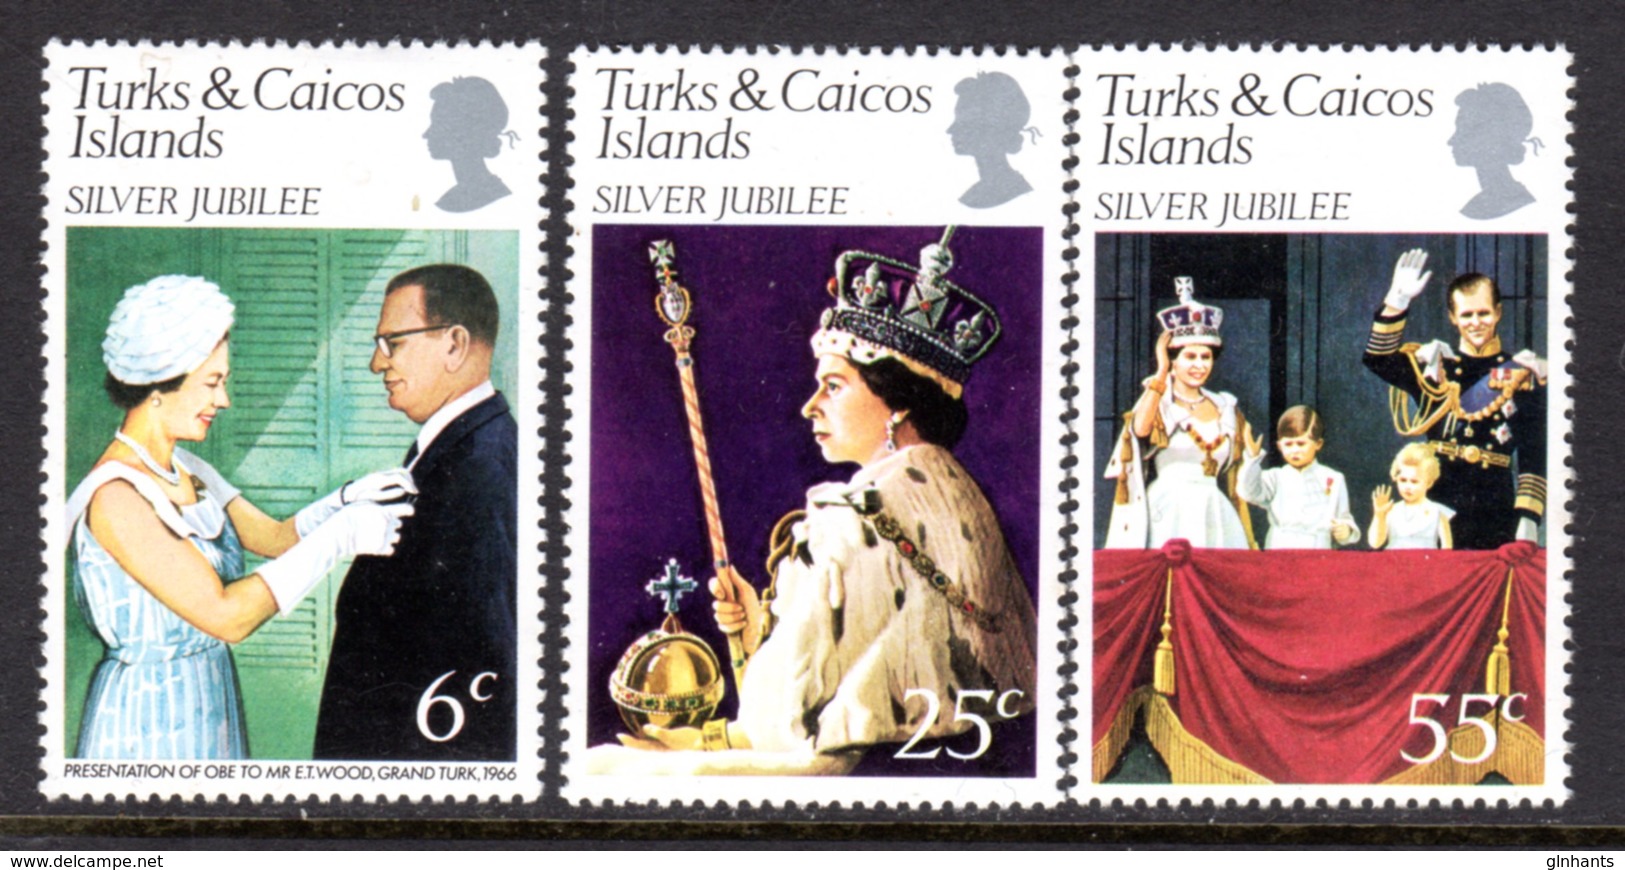 TURKS & CAICOS ISLANDS - 1977 SILVER JUBILEE SET (3V) FINE MNH ** SG 472-474 - Turks And Caicos